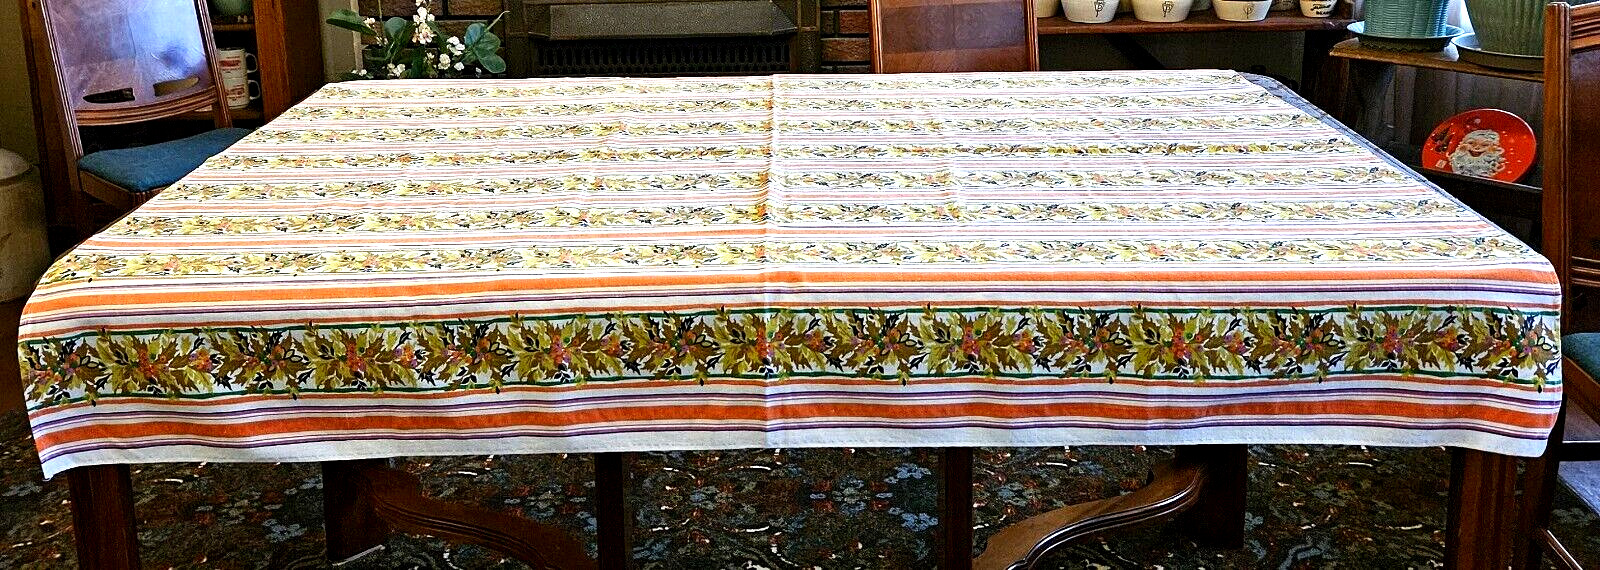 Vtg MCM Christmas Fall Tablecloth Homemade 52 x 58 Orange Stripes Leaves Berries